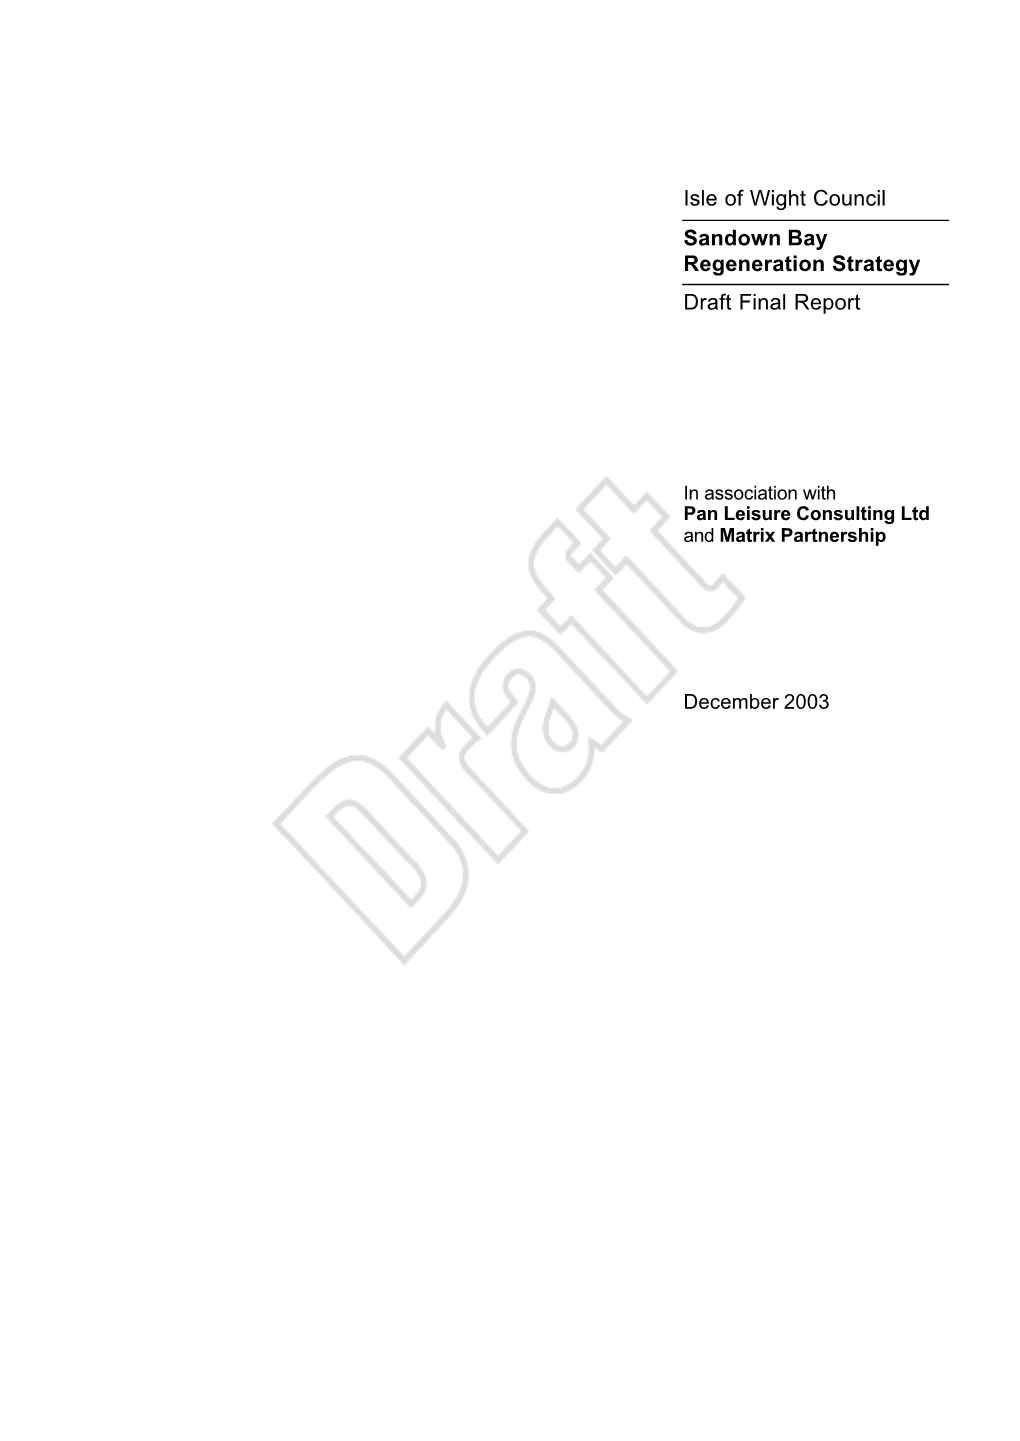 Sandown Bay Regeneration Strategy: Draft Final Report